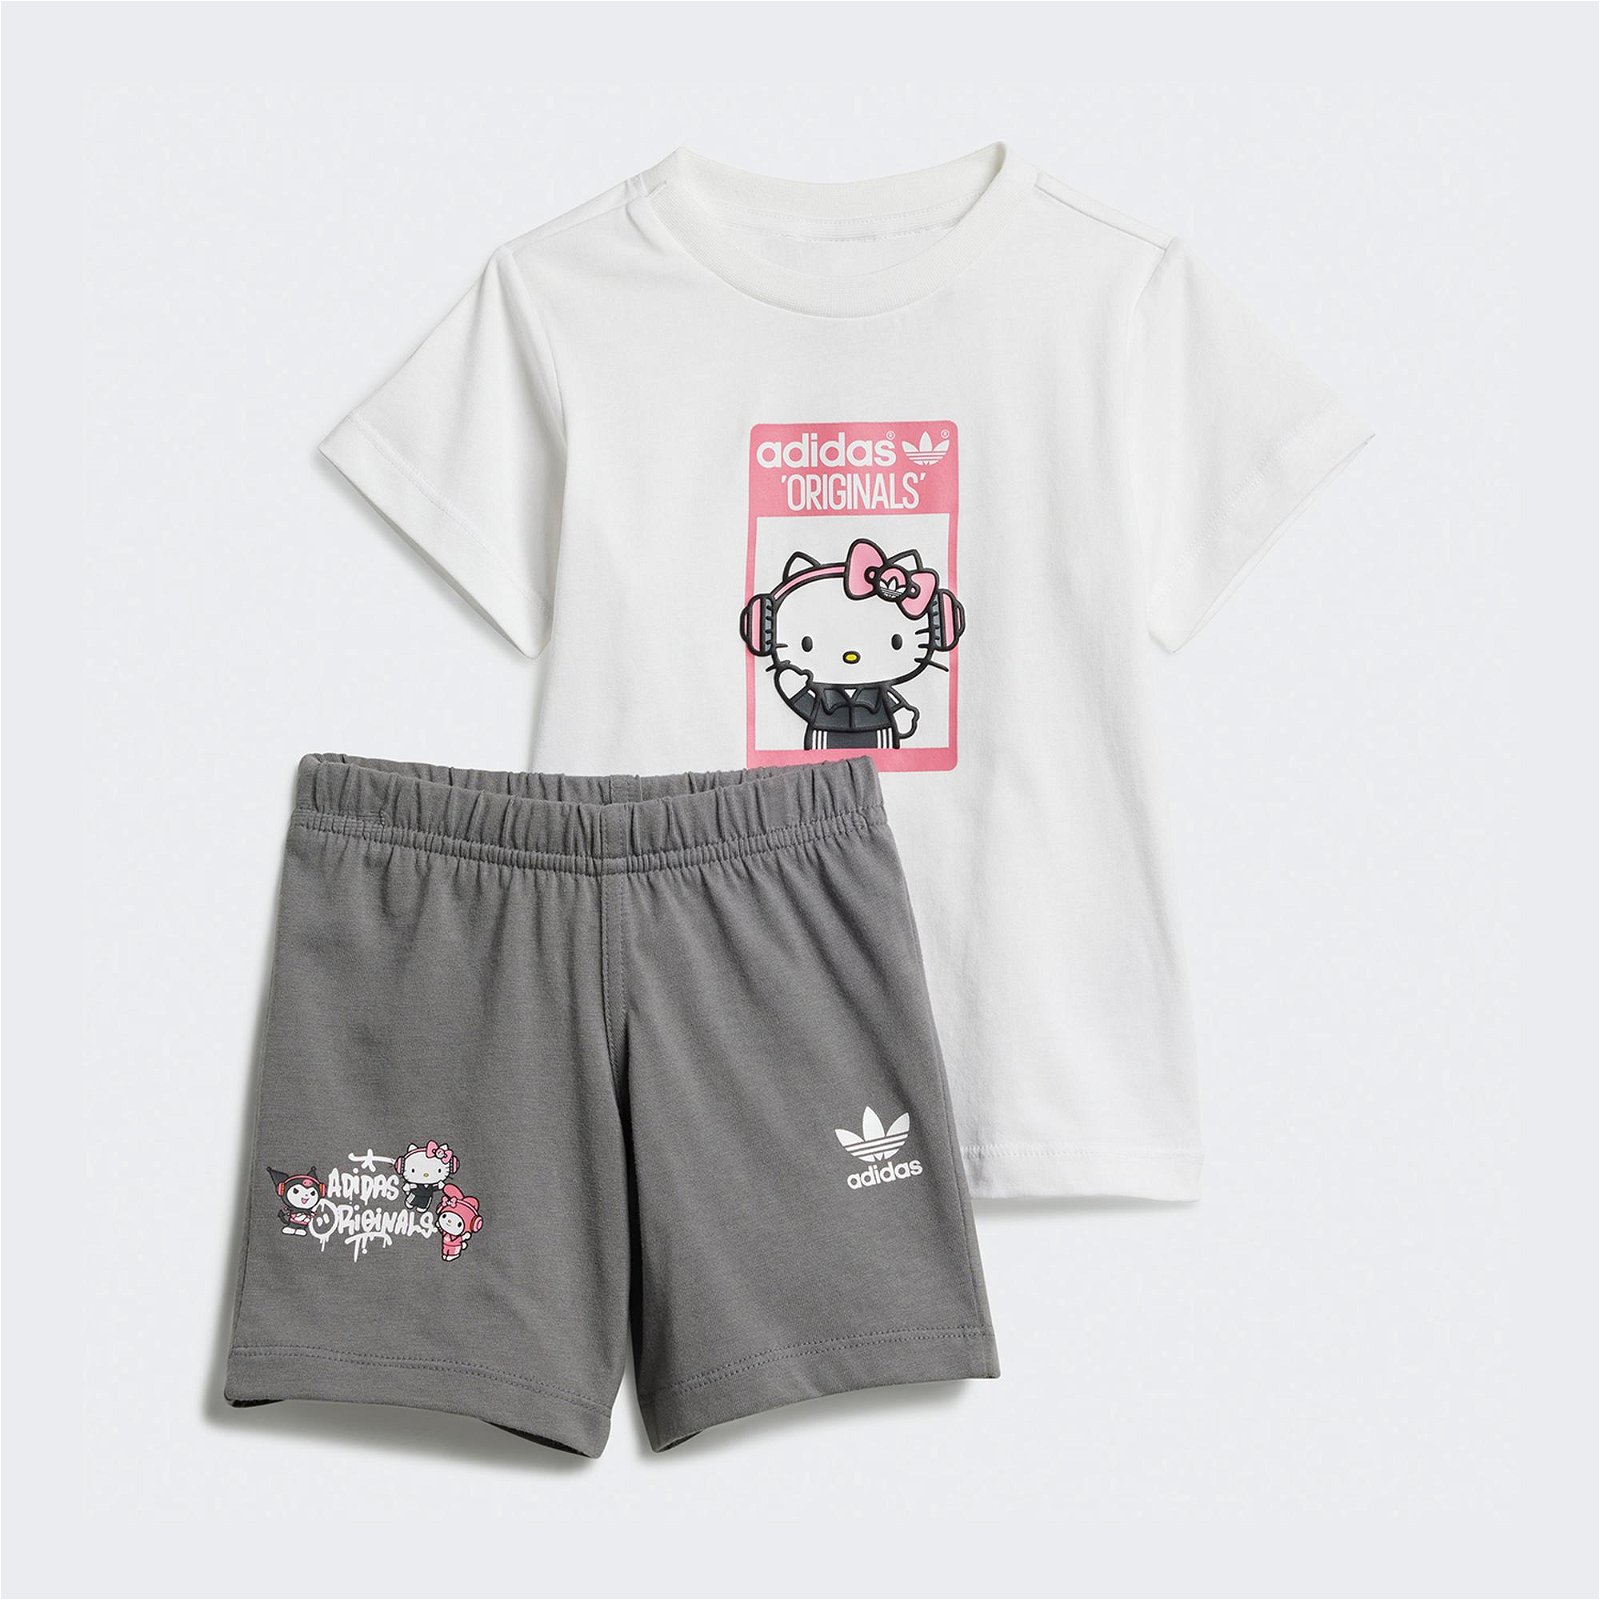 adidas Çocuk Beyaz Şort / T-Shirt Takımı